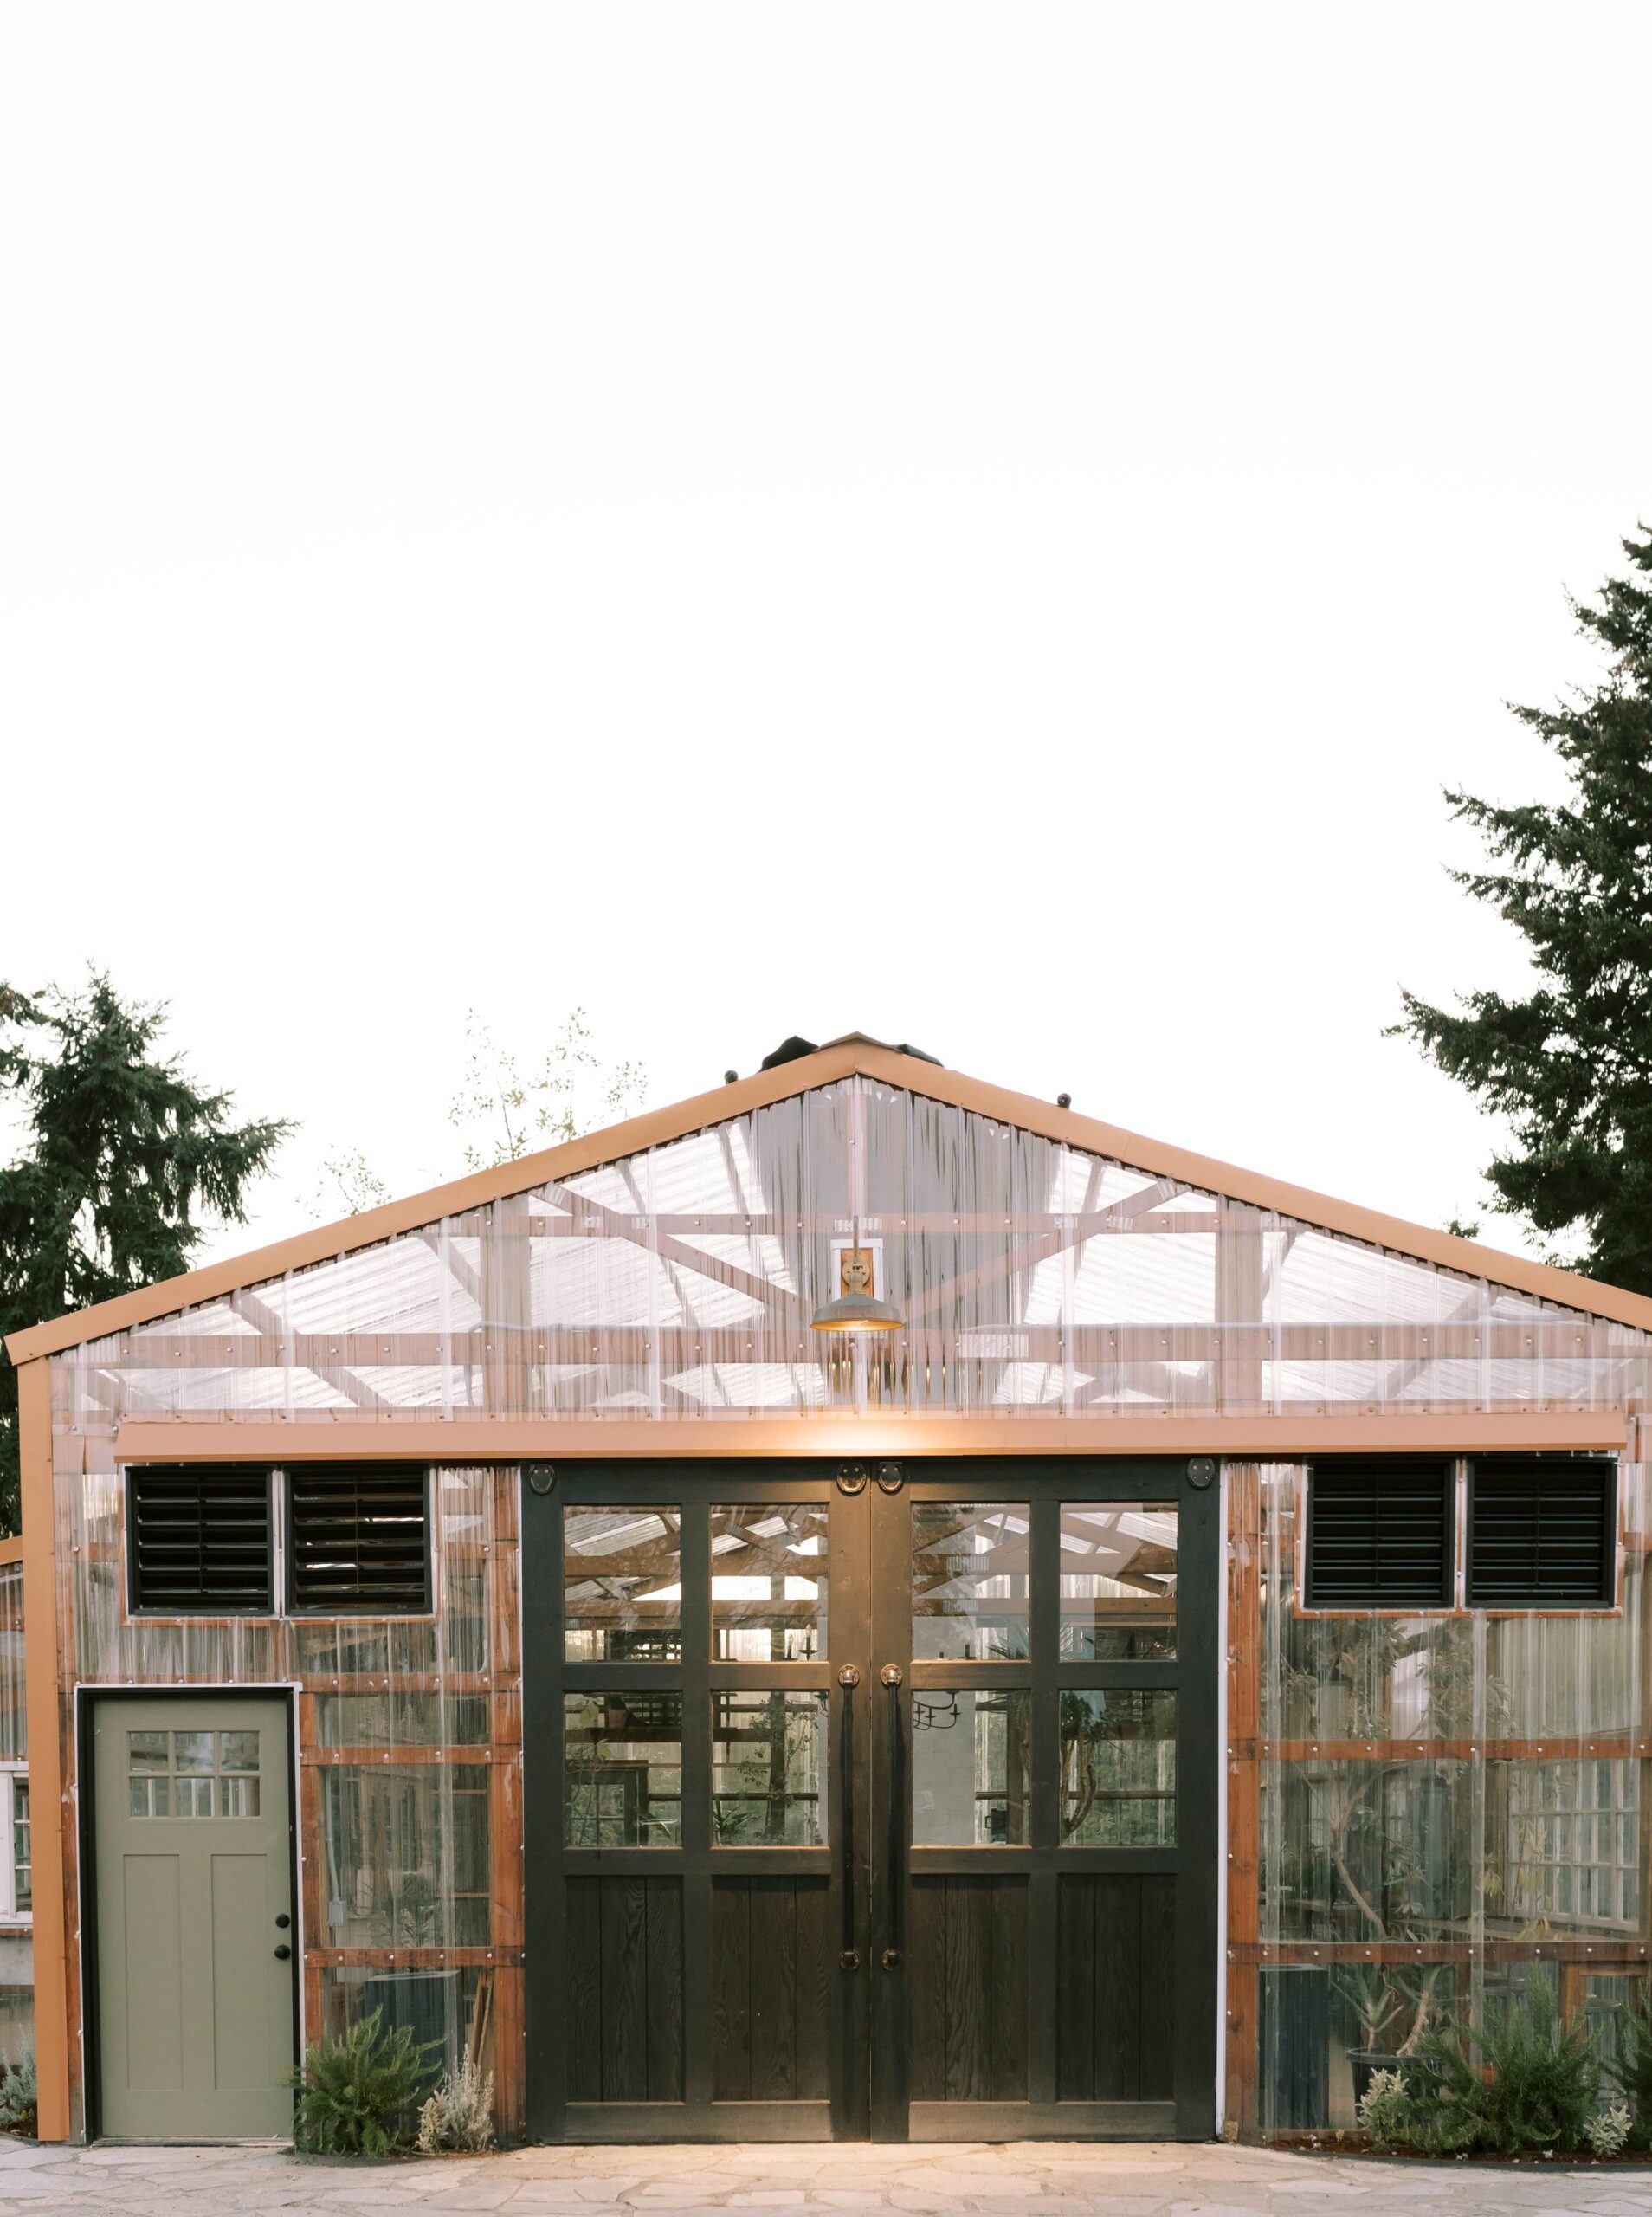  Mount Hood Center Greenhouse Oregon Wedding Venue, Boho chic, modern 